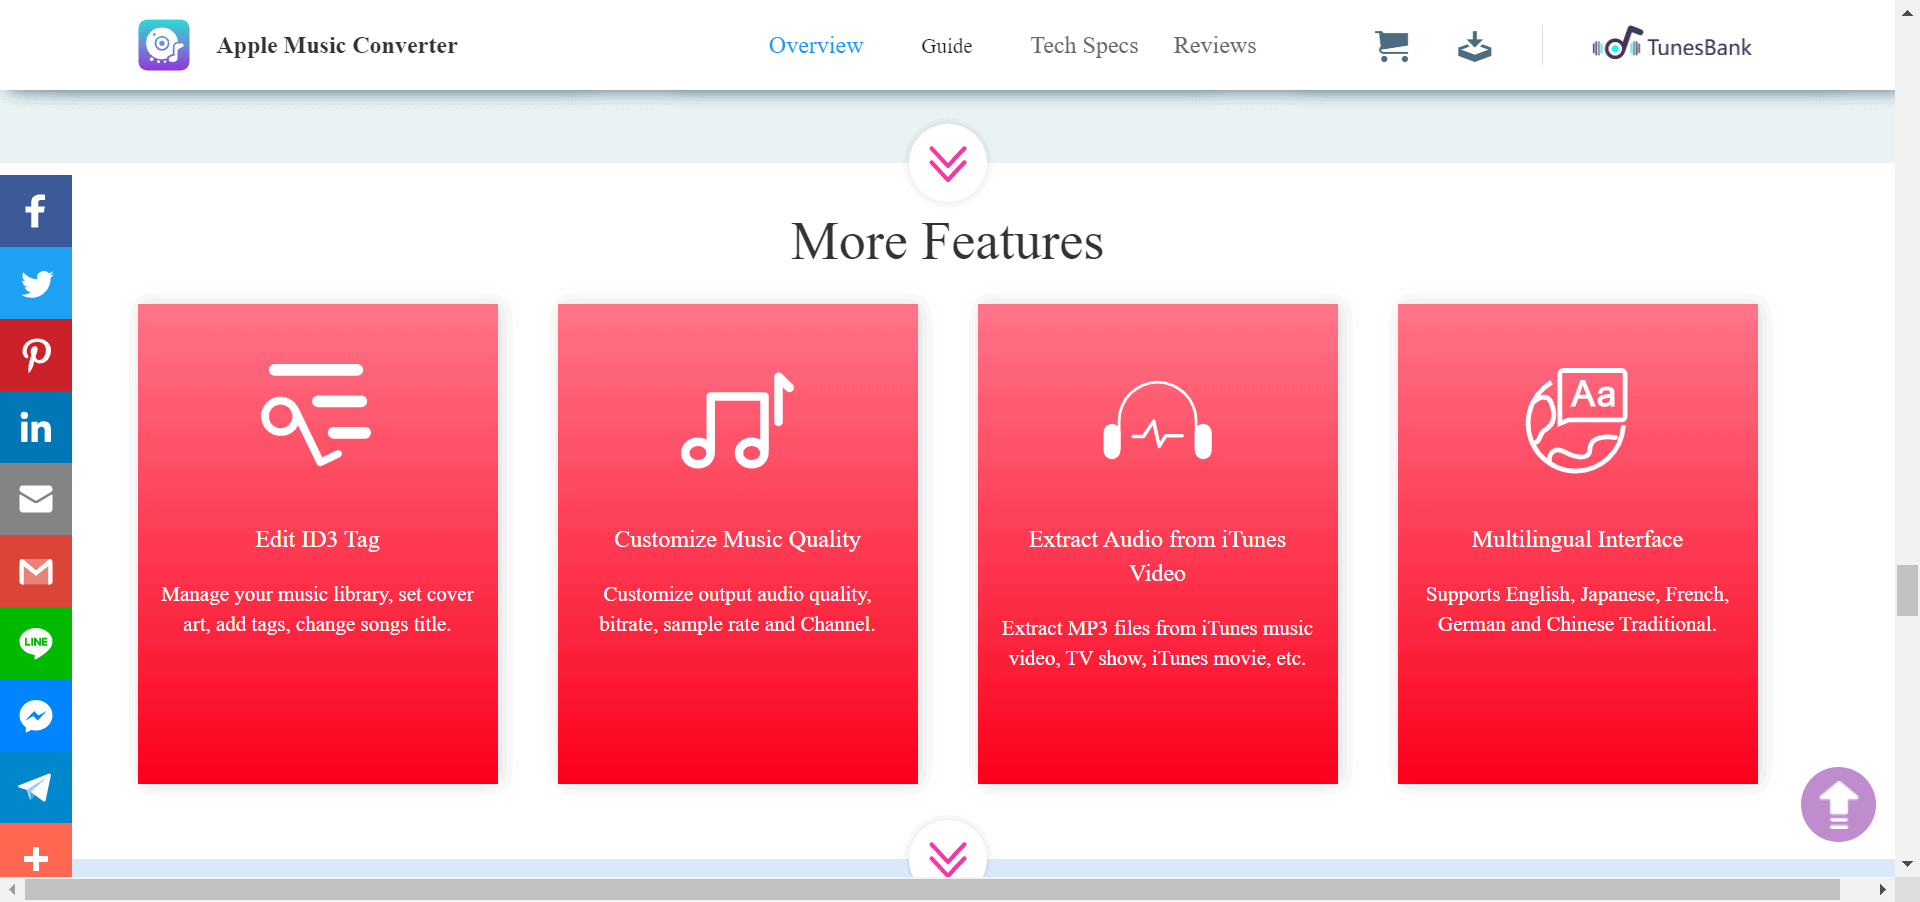 TunesBank-Apple-Music-Converter Feature